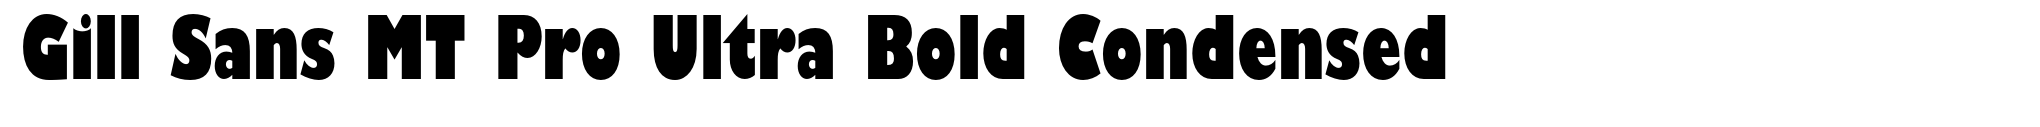 Gill Sans MT Pro Ultra Bold Condensed image